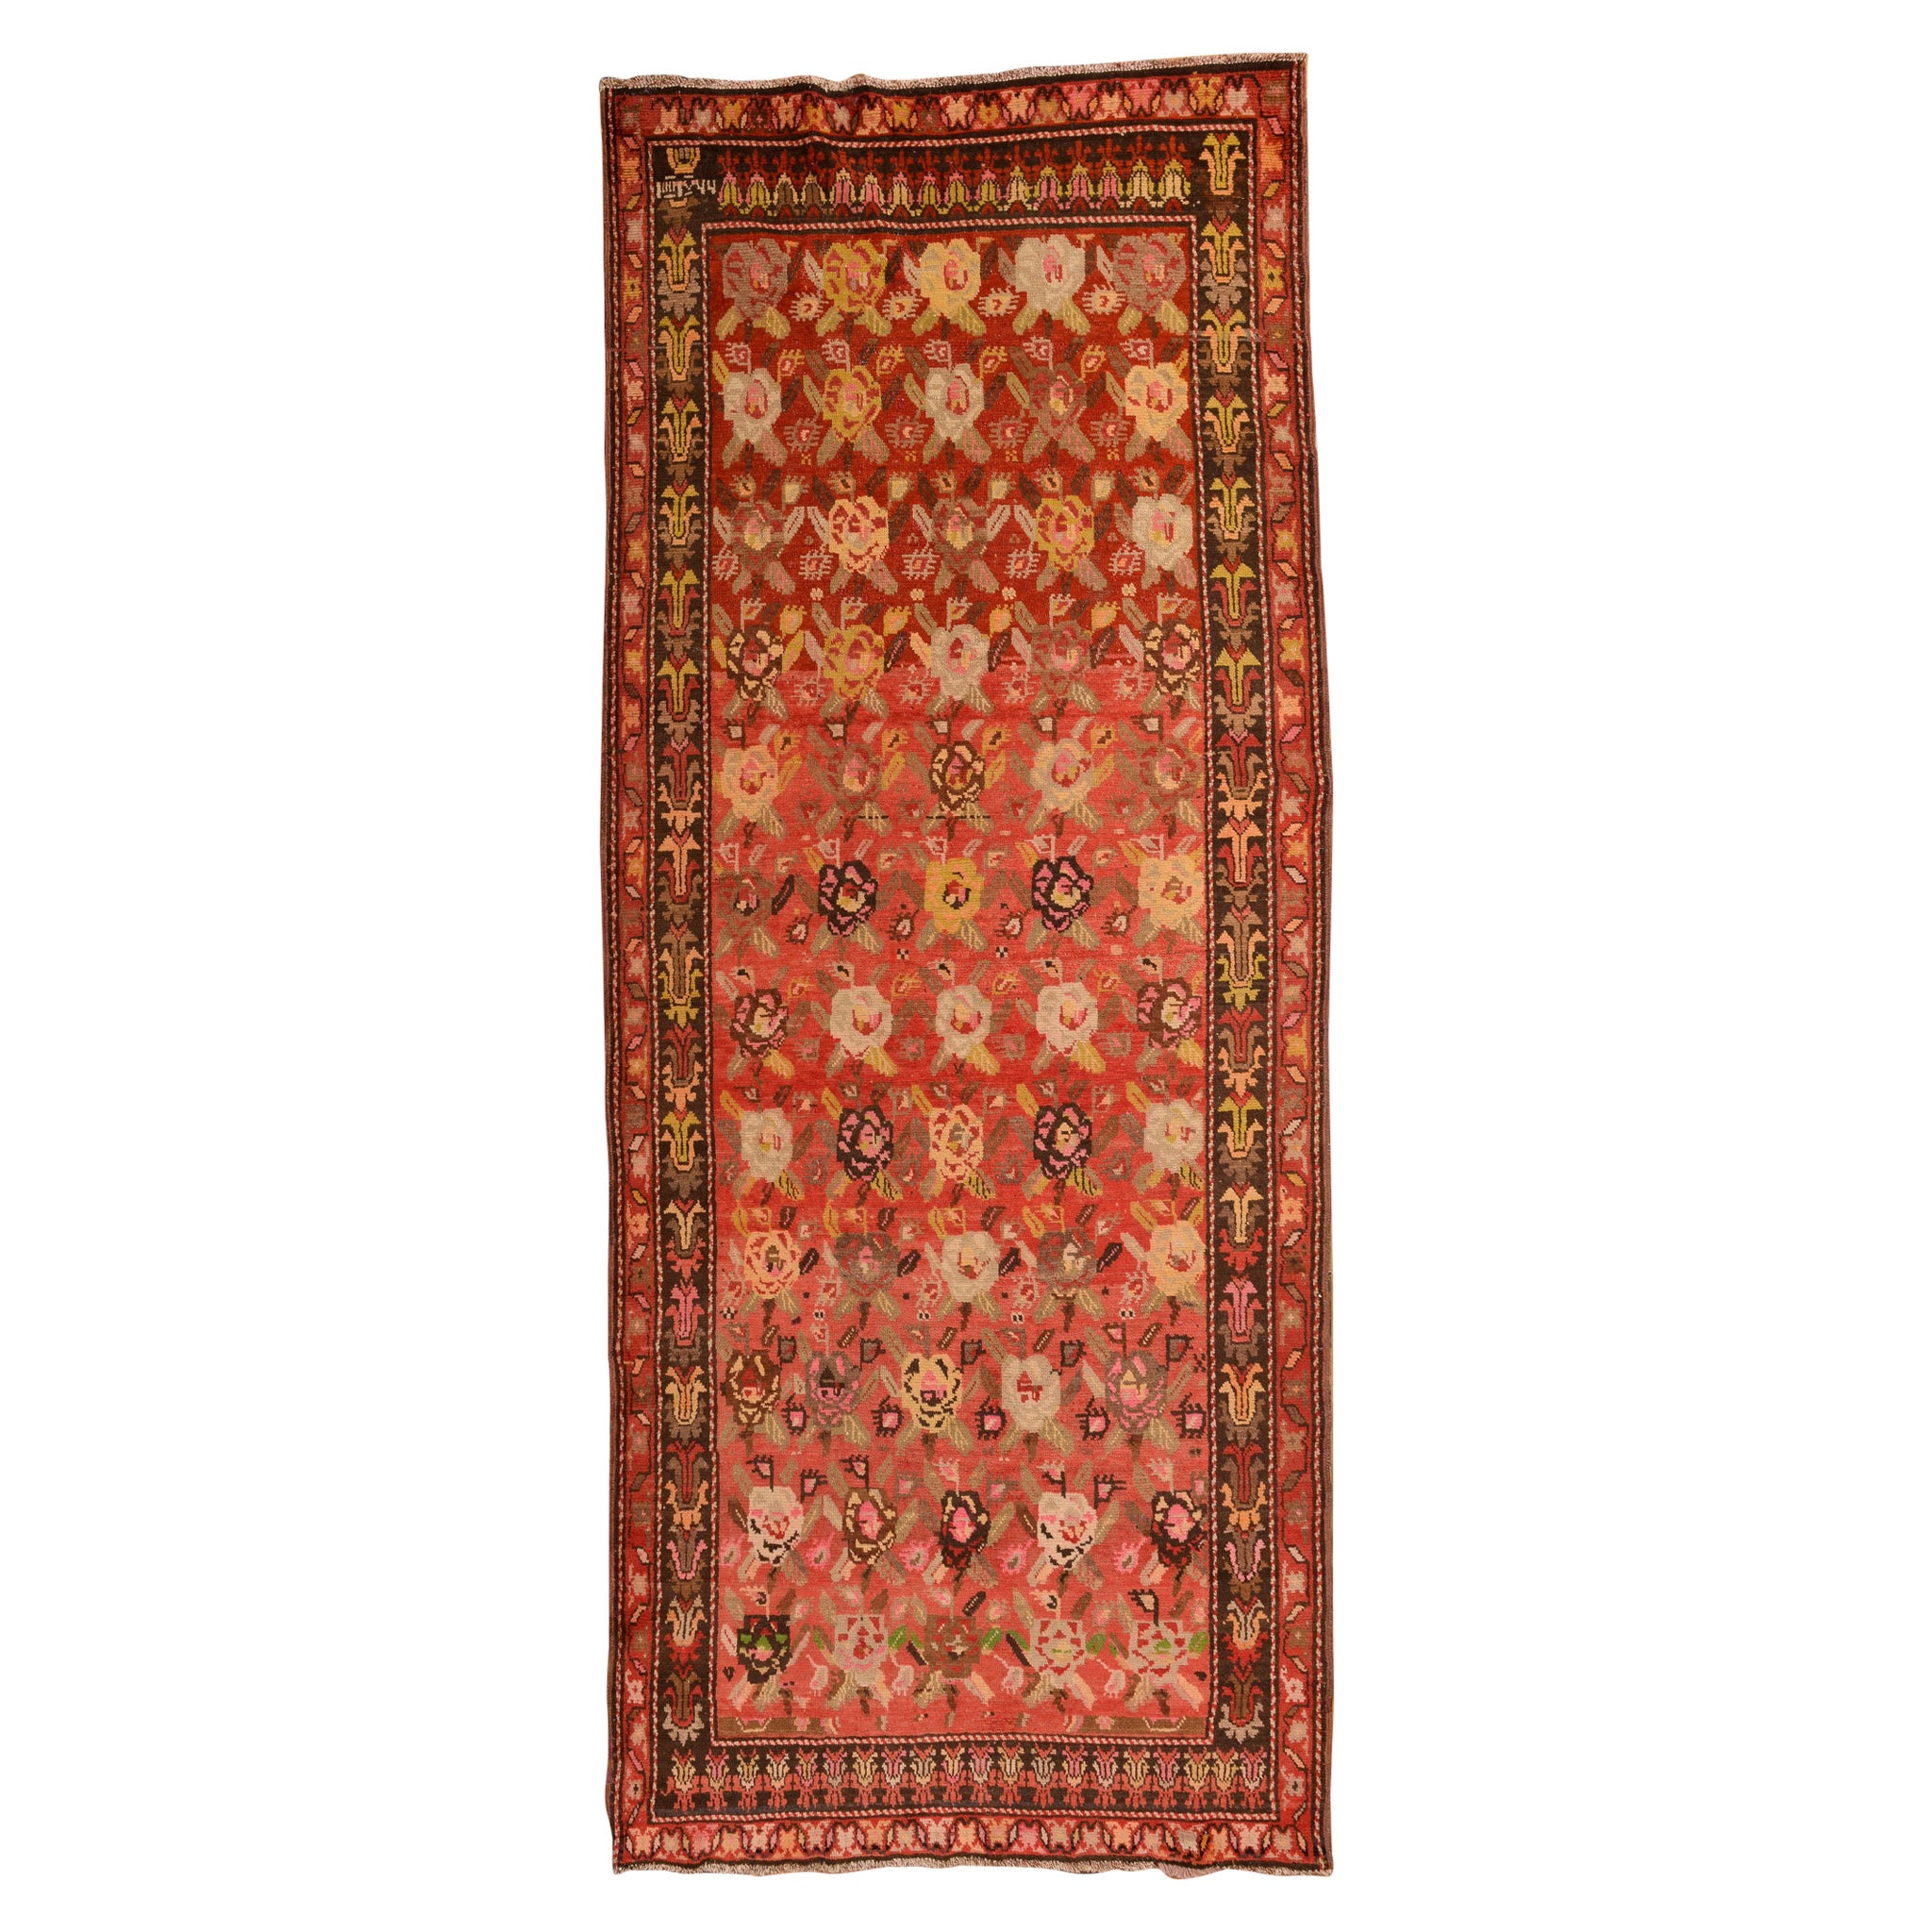 Old Karabagh or Garebagh Dated Caucasian Carpet For Sale